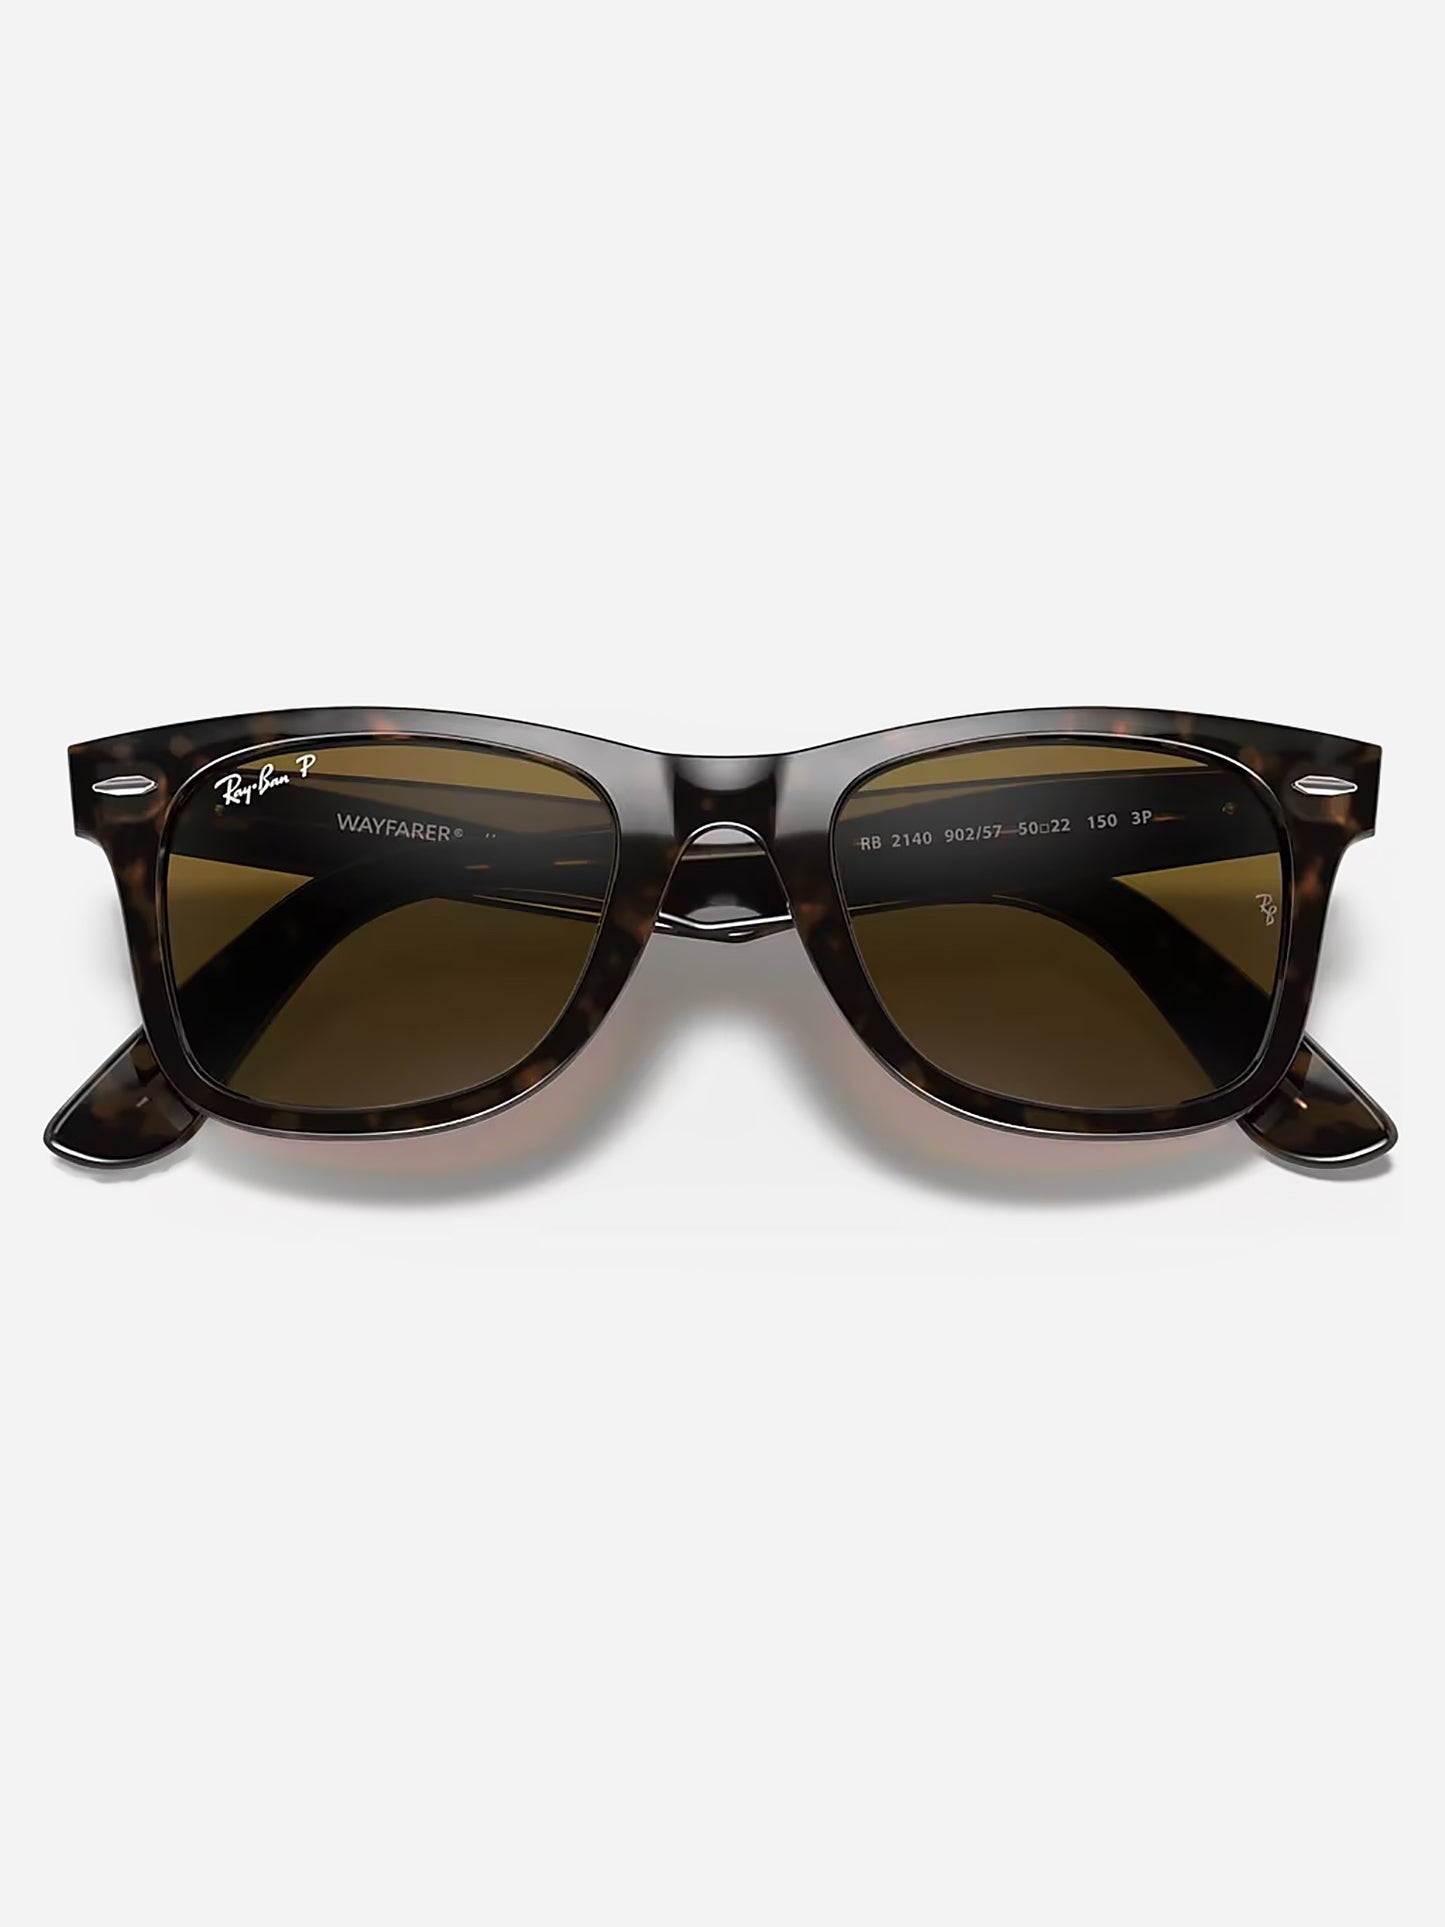 Ray-Ban Original Wayfarer Classic Sunglasses